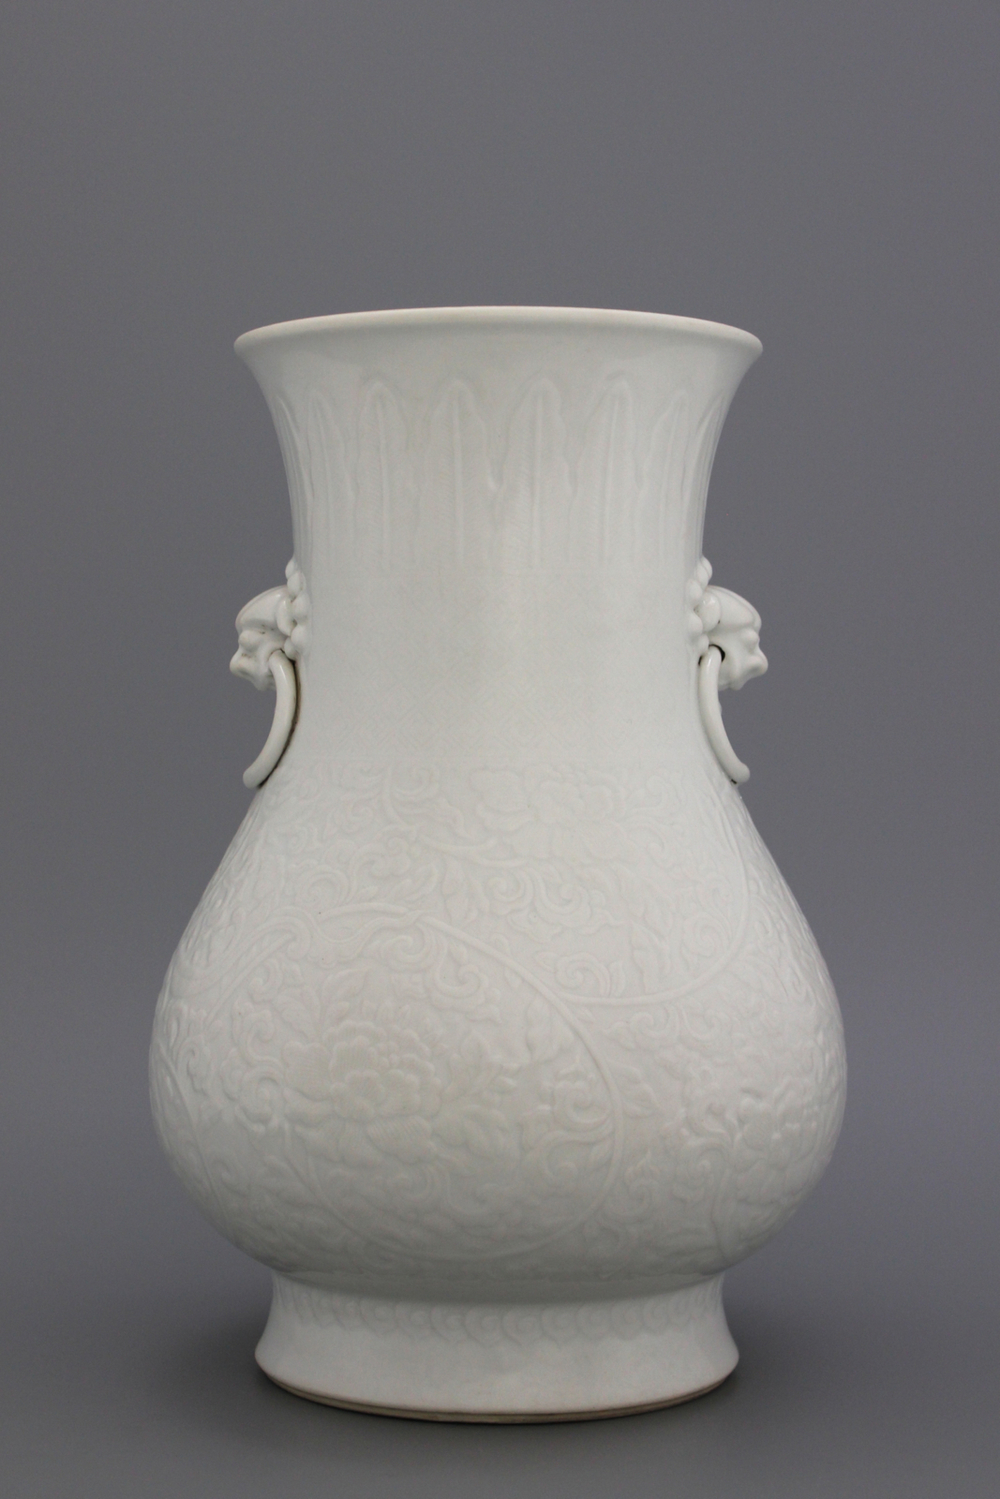 Hu-vormige vaas in blanc de chine, Chinees porselein, met ingekerfd Anhua-decor, 18e-19e eeuw